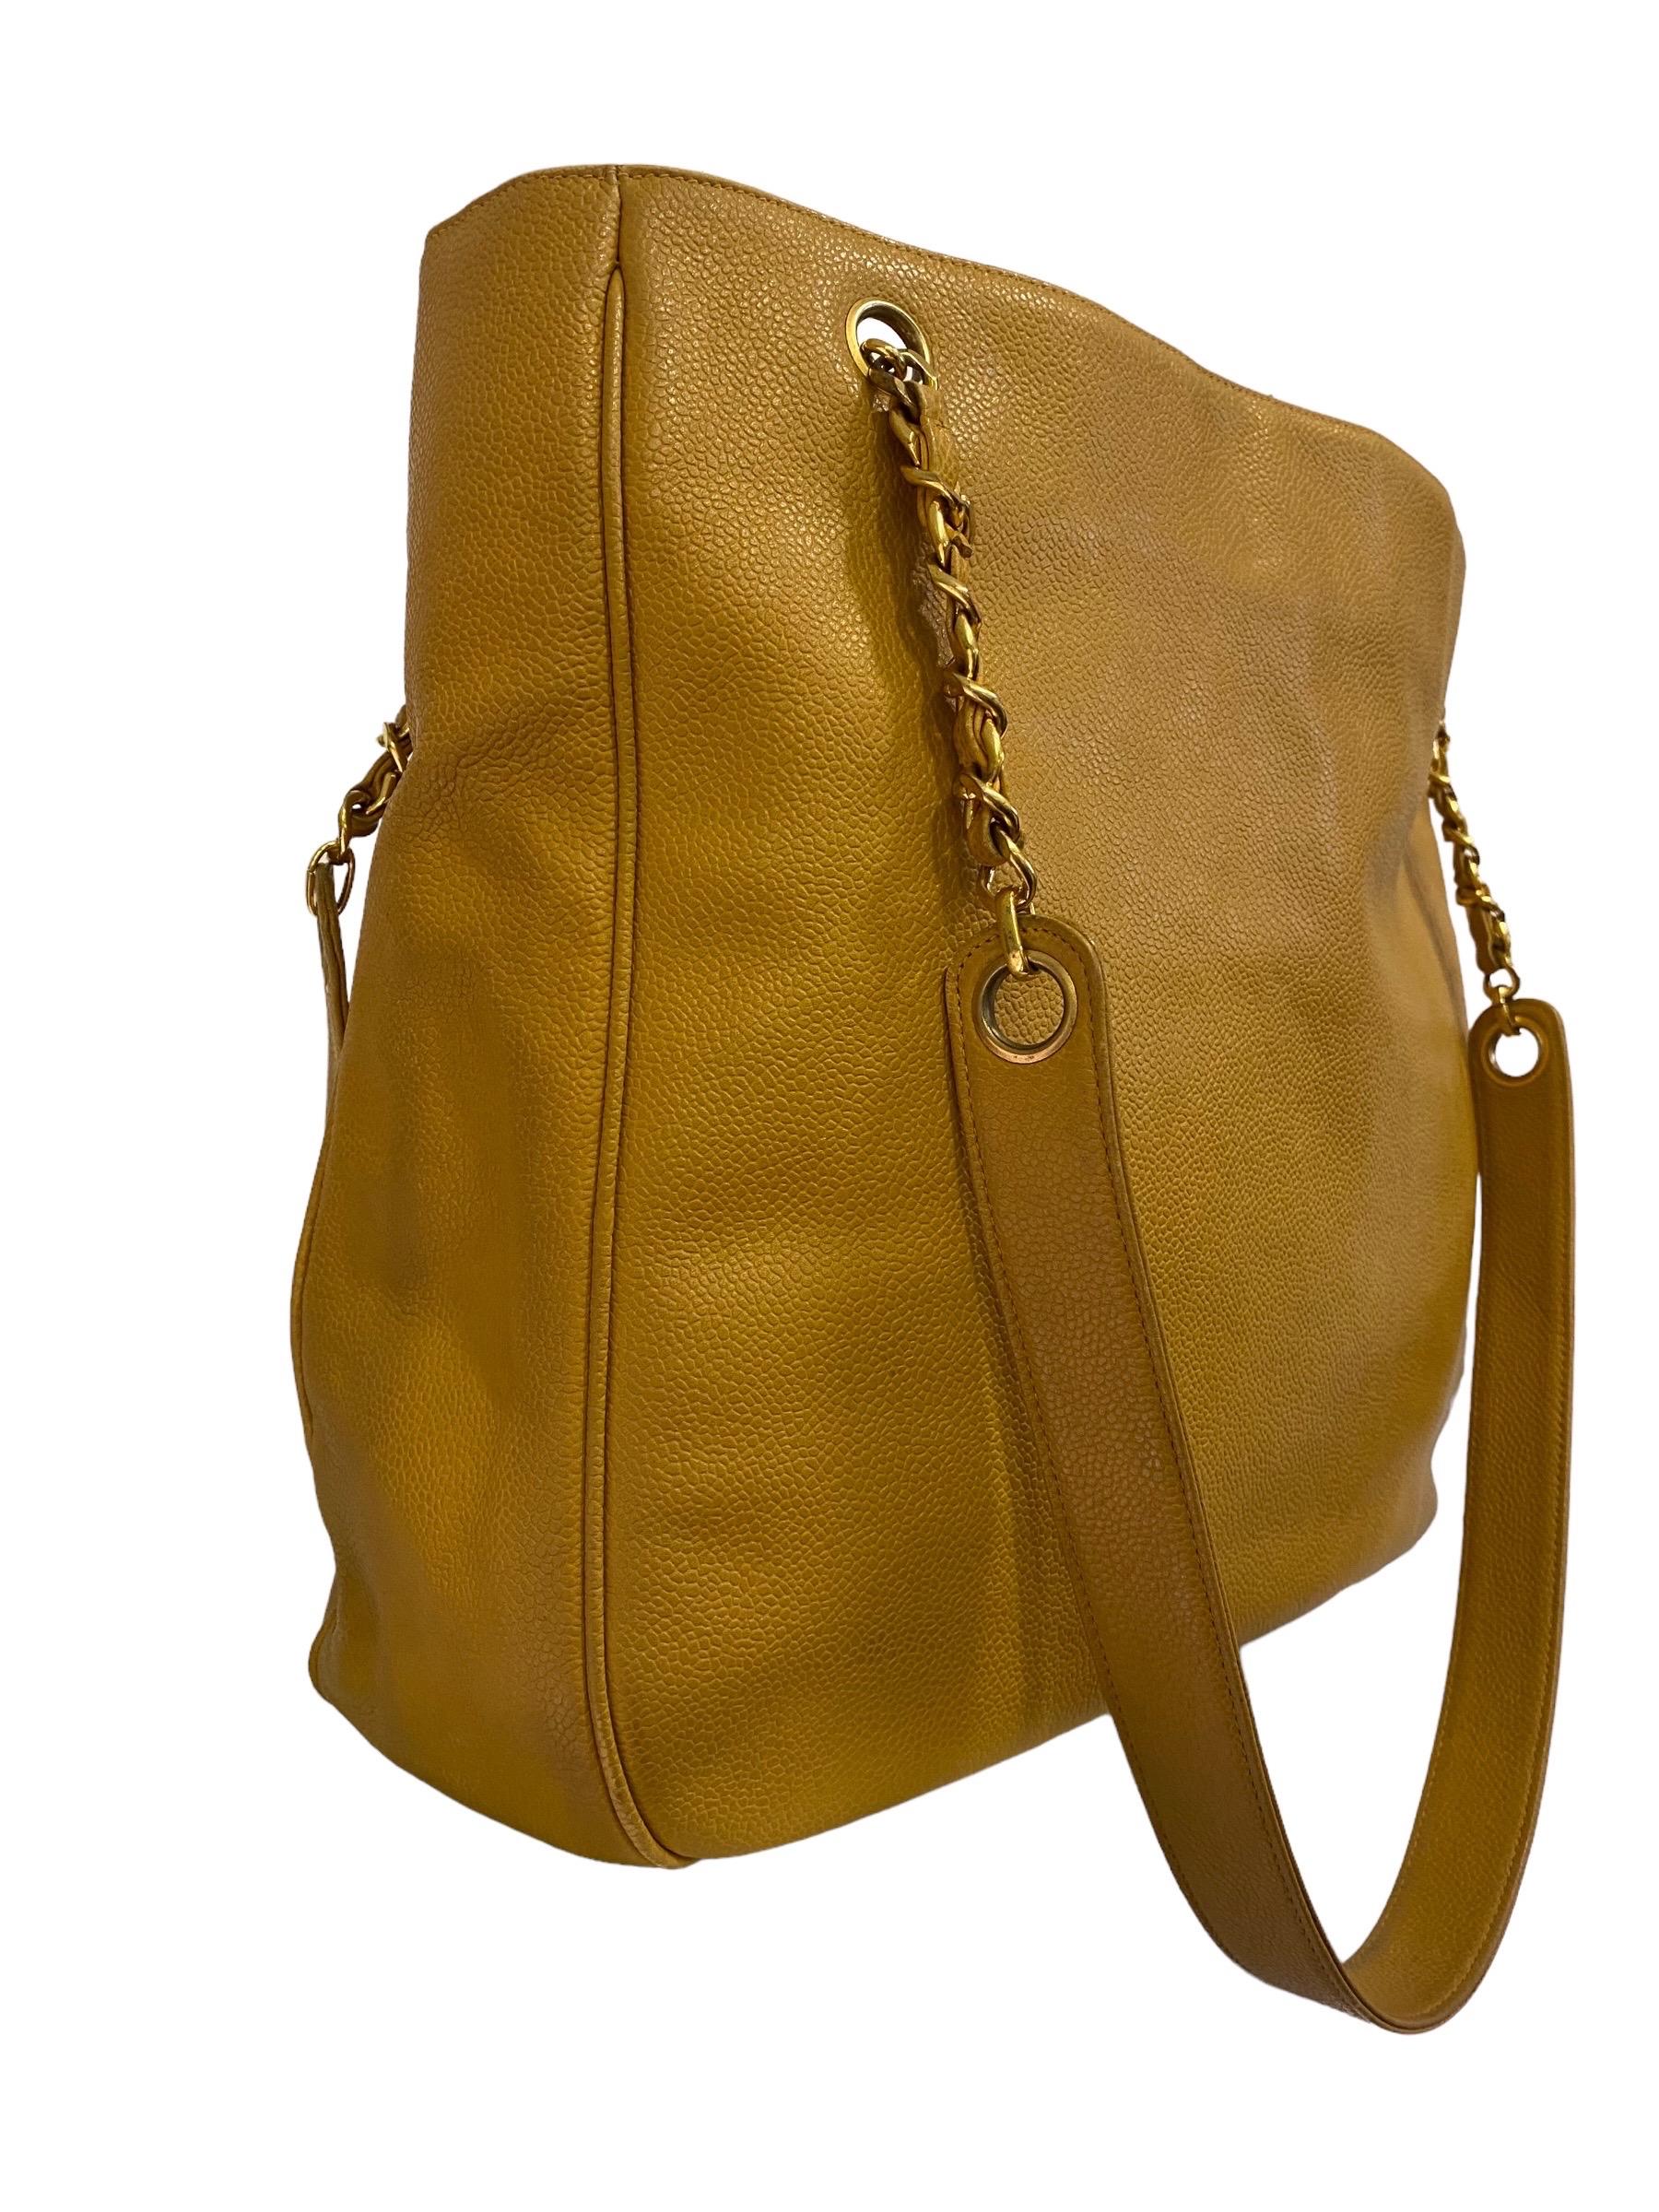 Chanel Yellow Big Tote Shoulder Bag Vintage  1